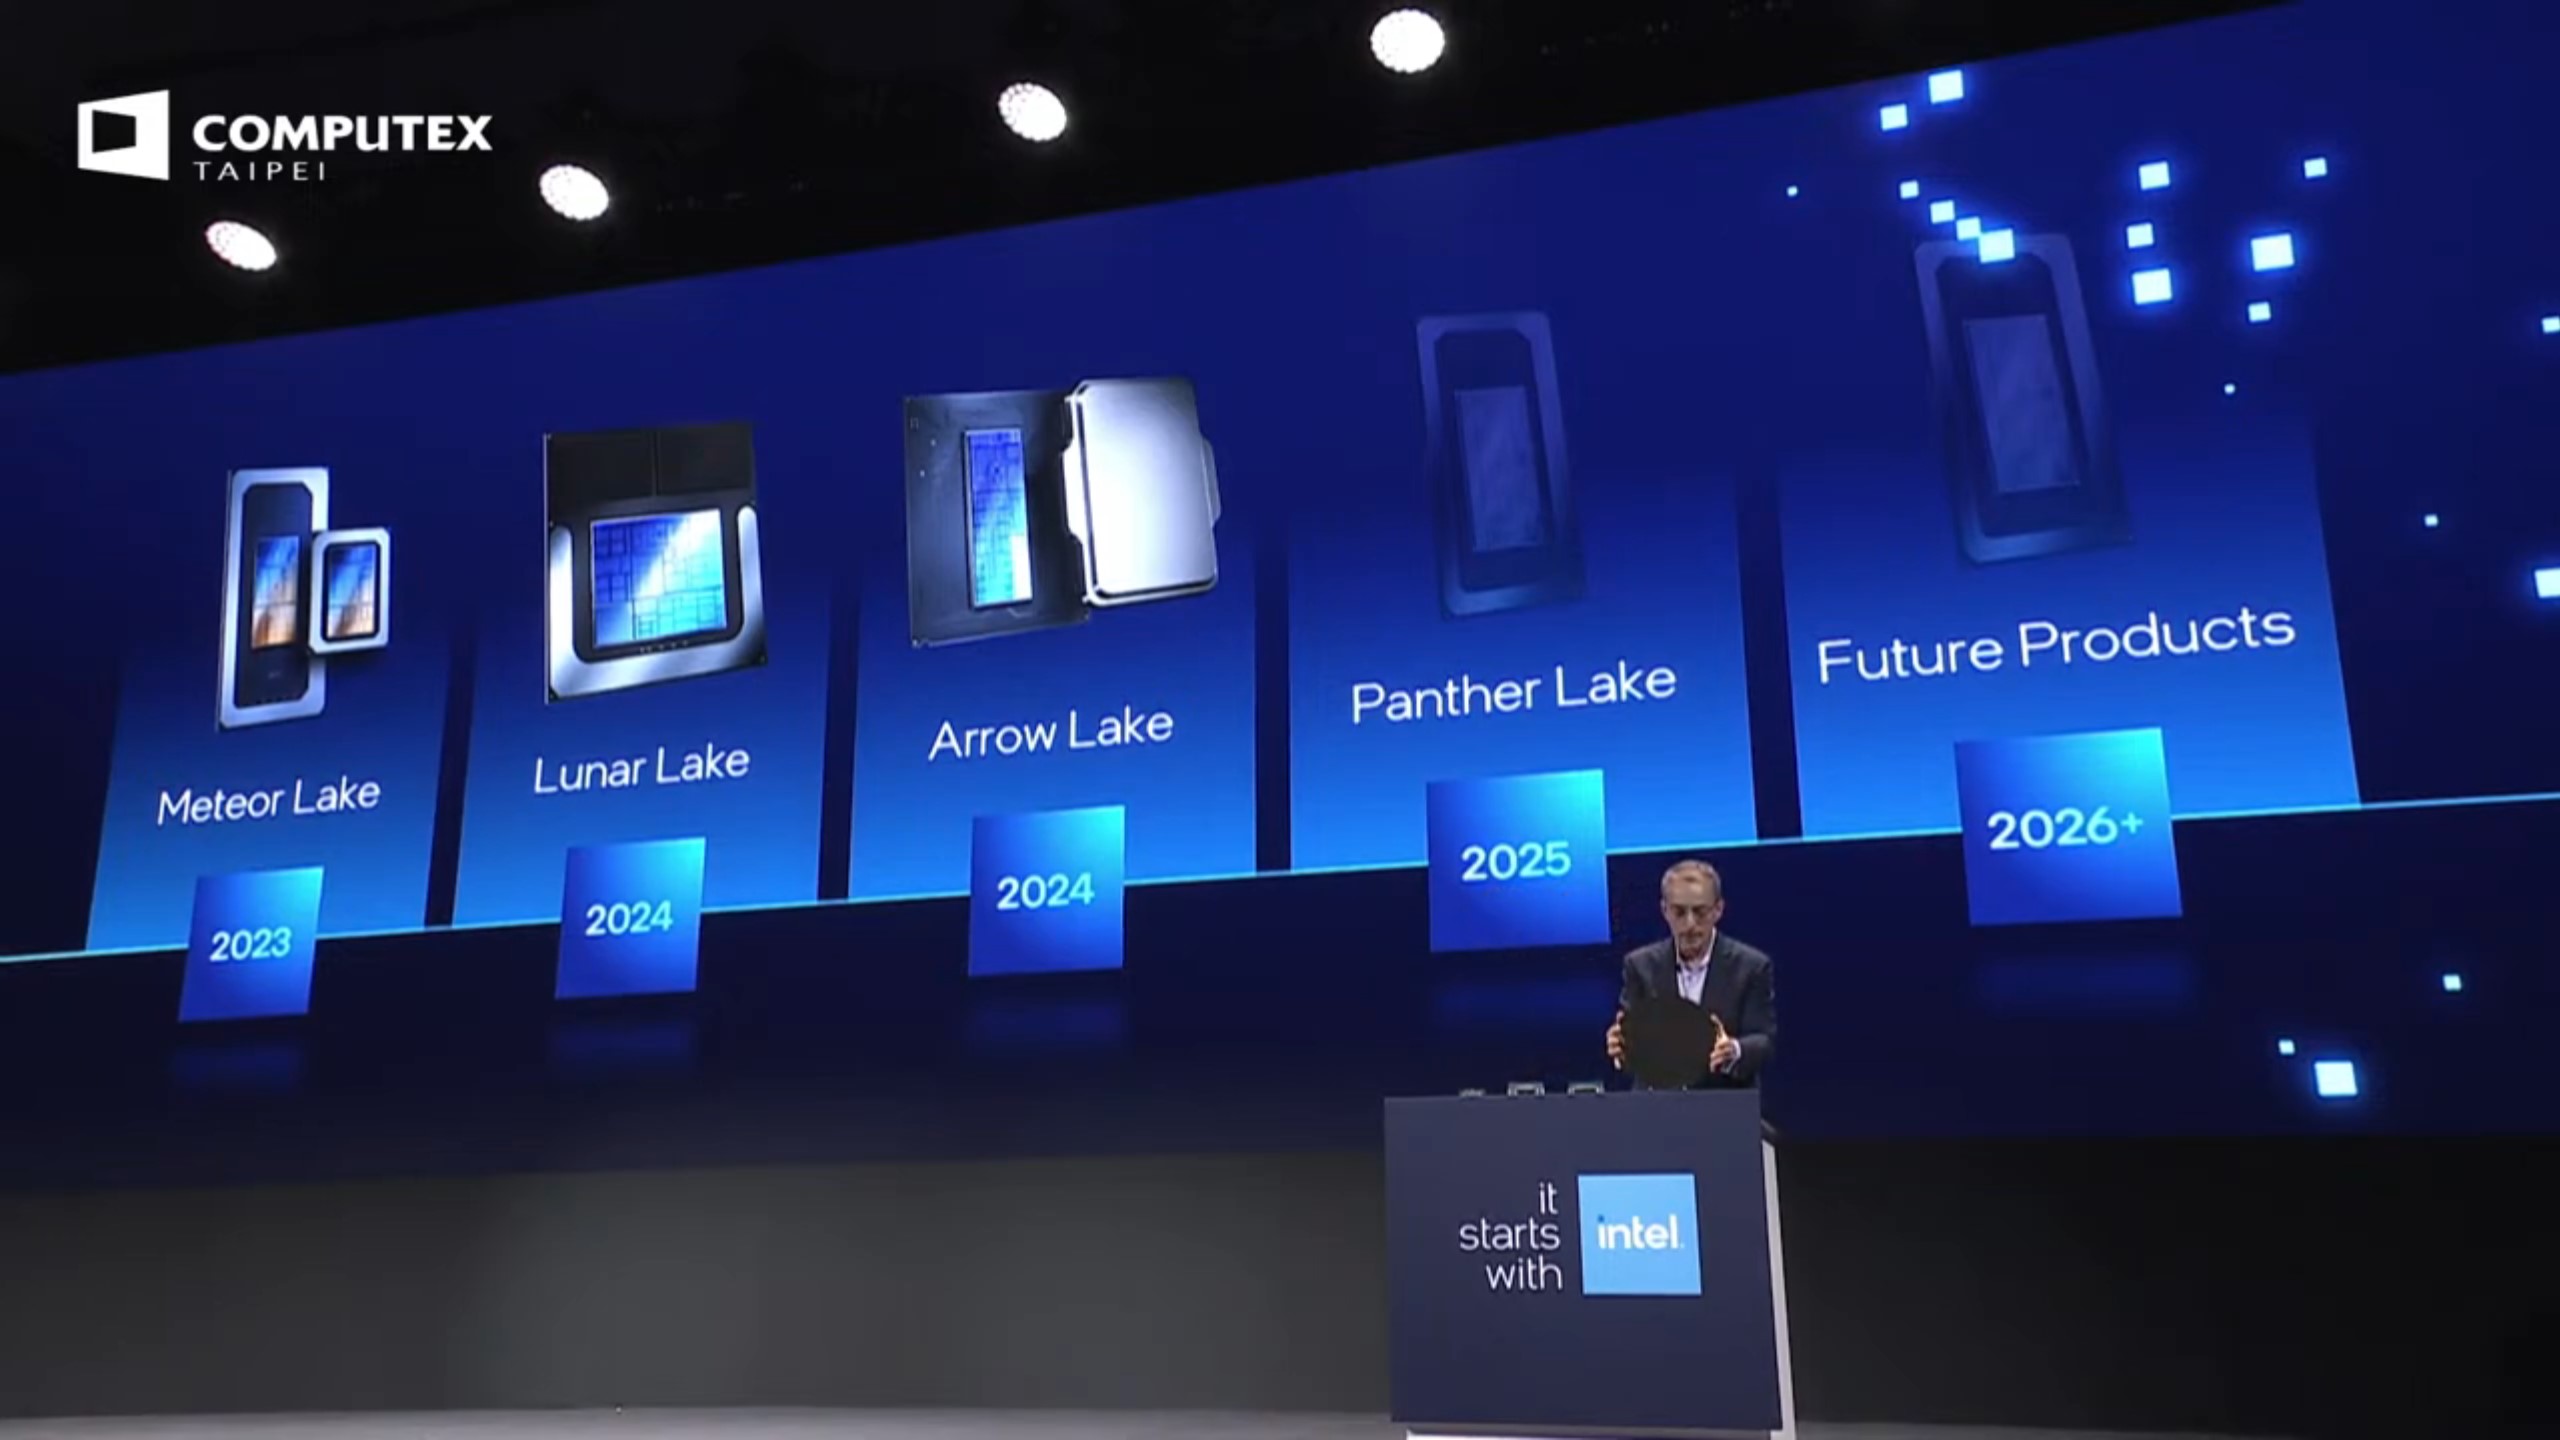 Intel CEO Pat Gelsinger presents Intel's roadmap including Arrow Lake, Lunar Lake, and Panther Lake.